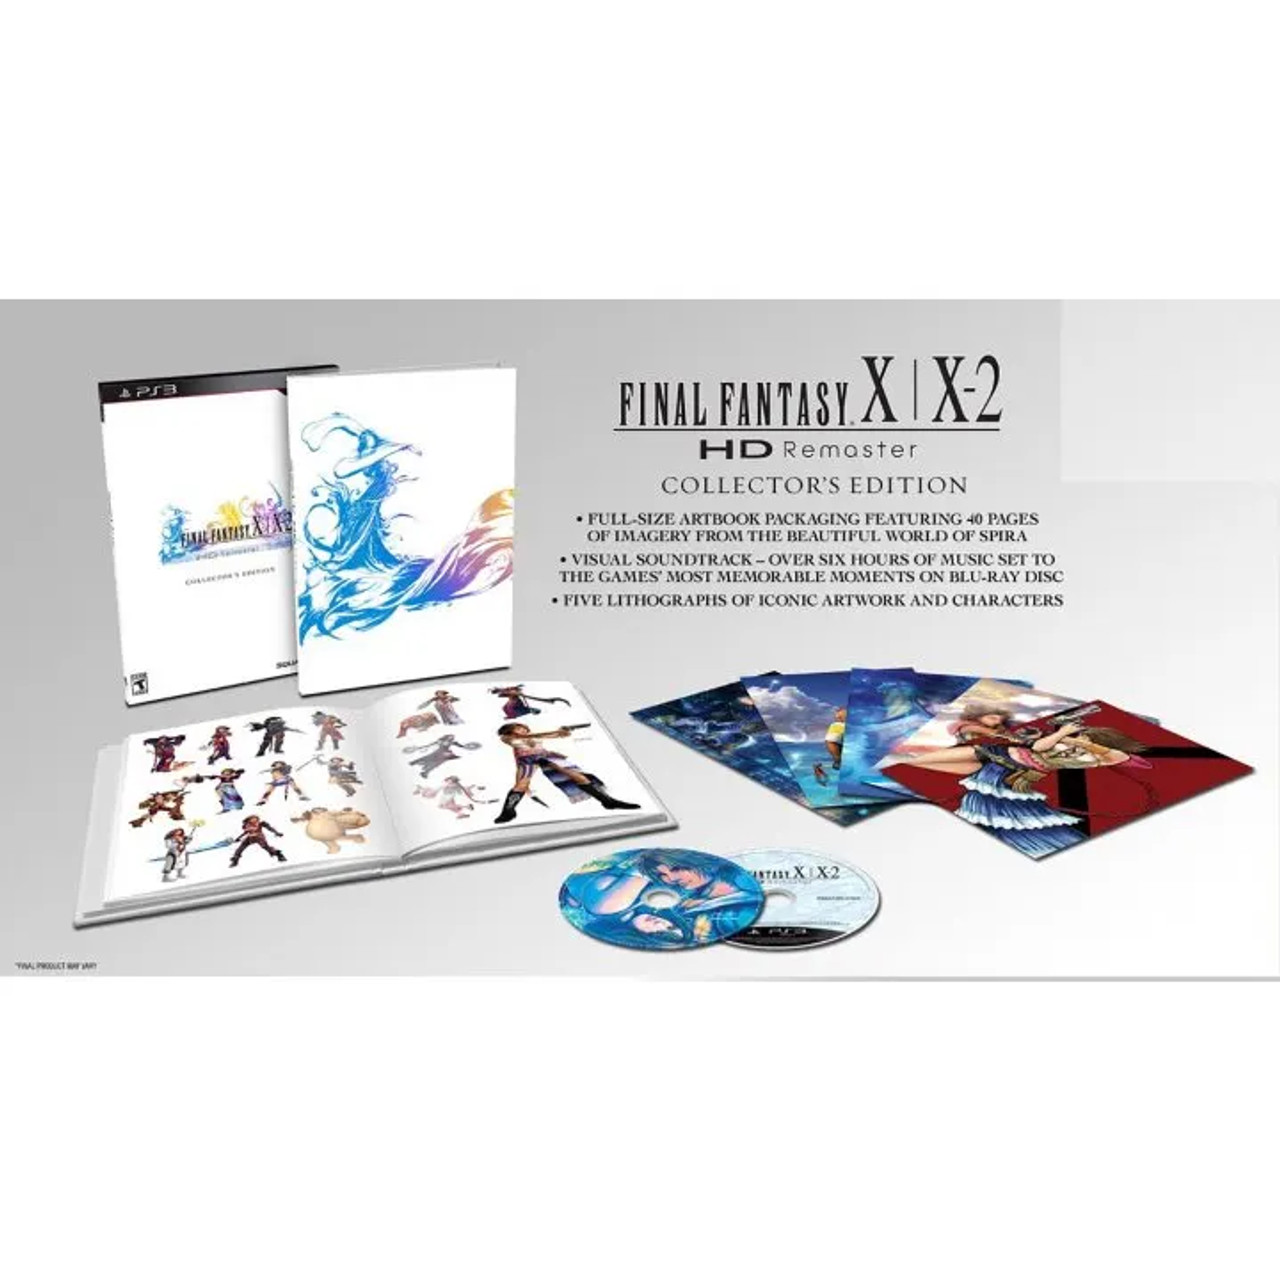 FINAL FANTASY X / X-2 HD Remaster Collector's Edition PlayStation 3